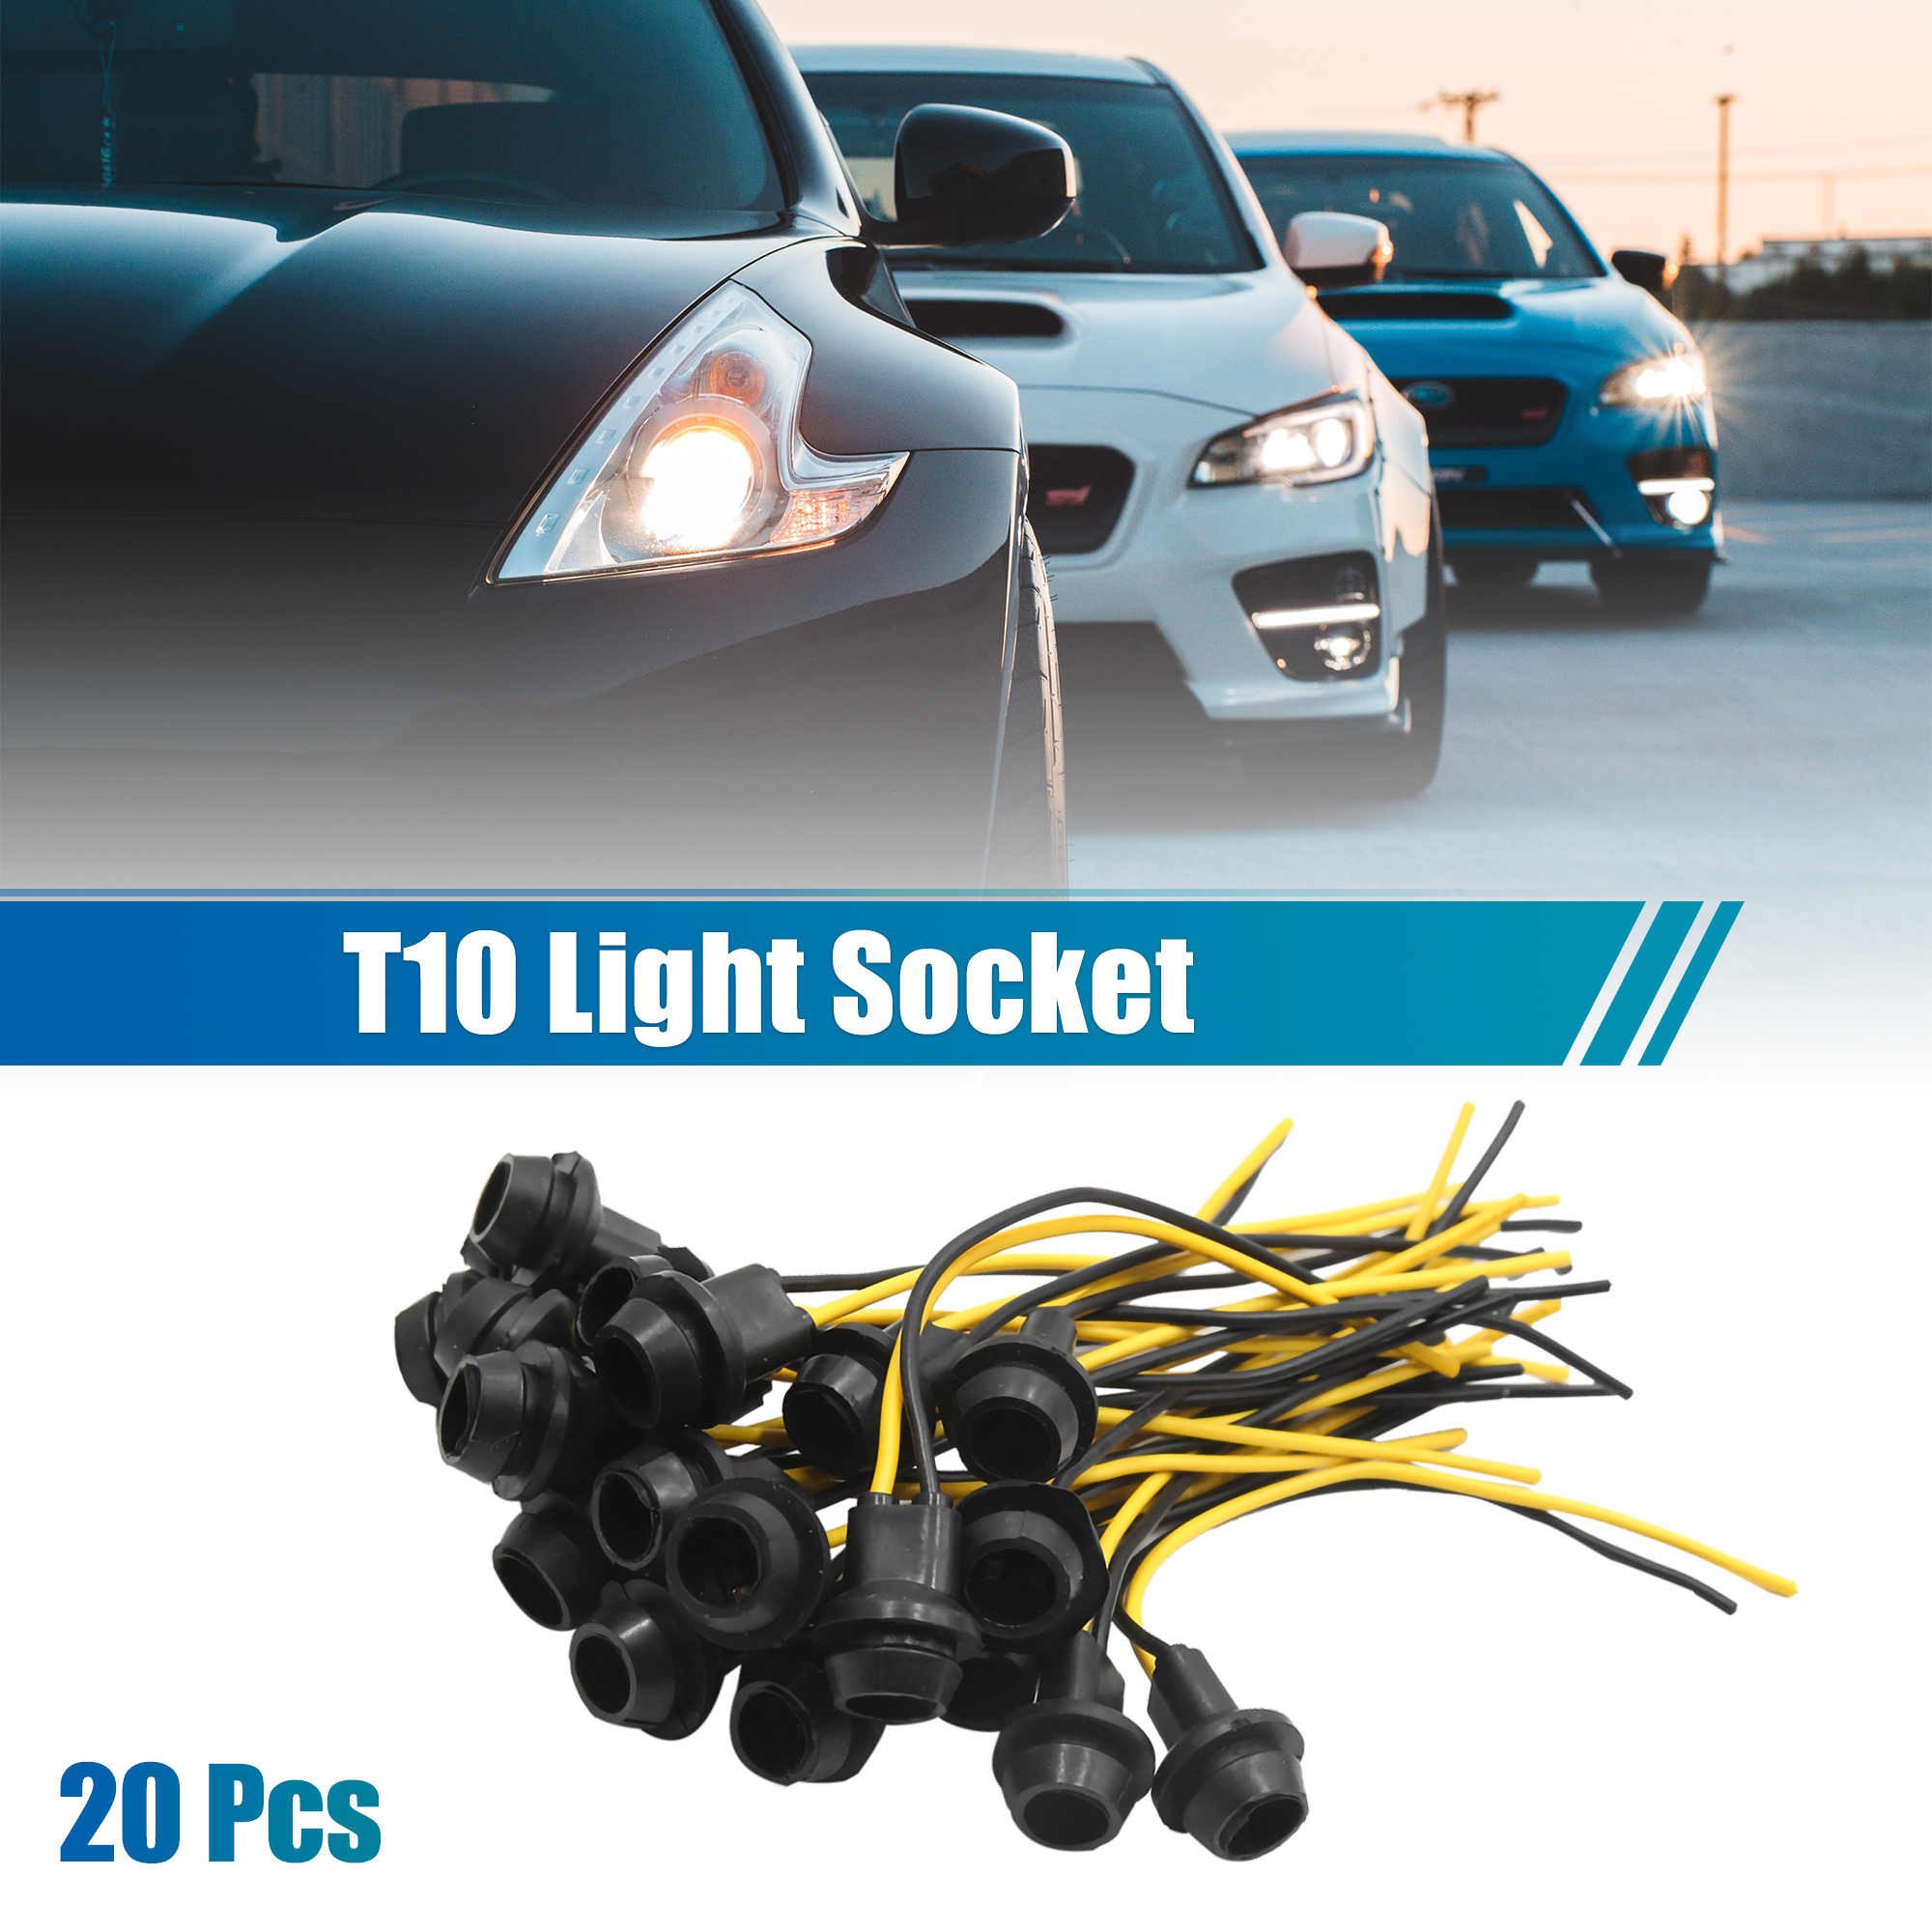 Unique Bargains 20pcs T10 W5W LED Lamp Car Wedge Light Bulb Socket Holder Extension Connector